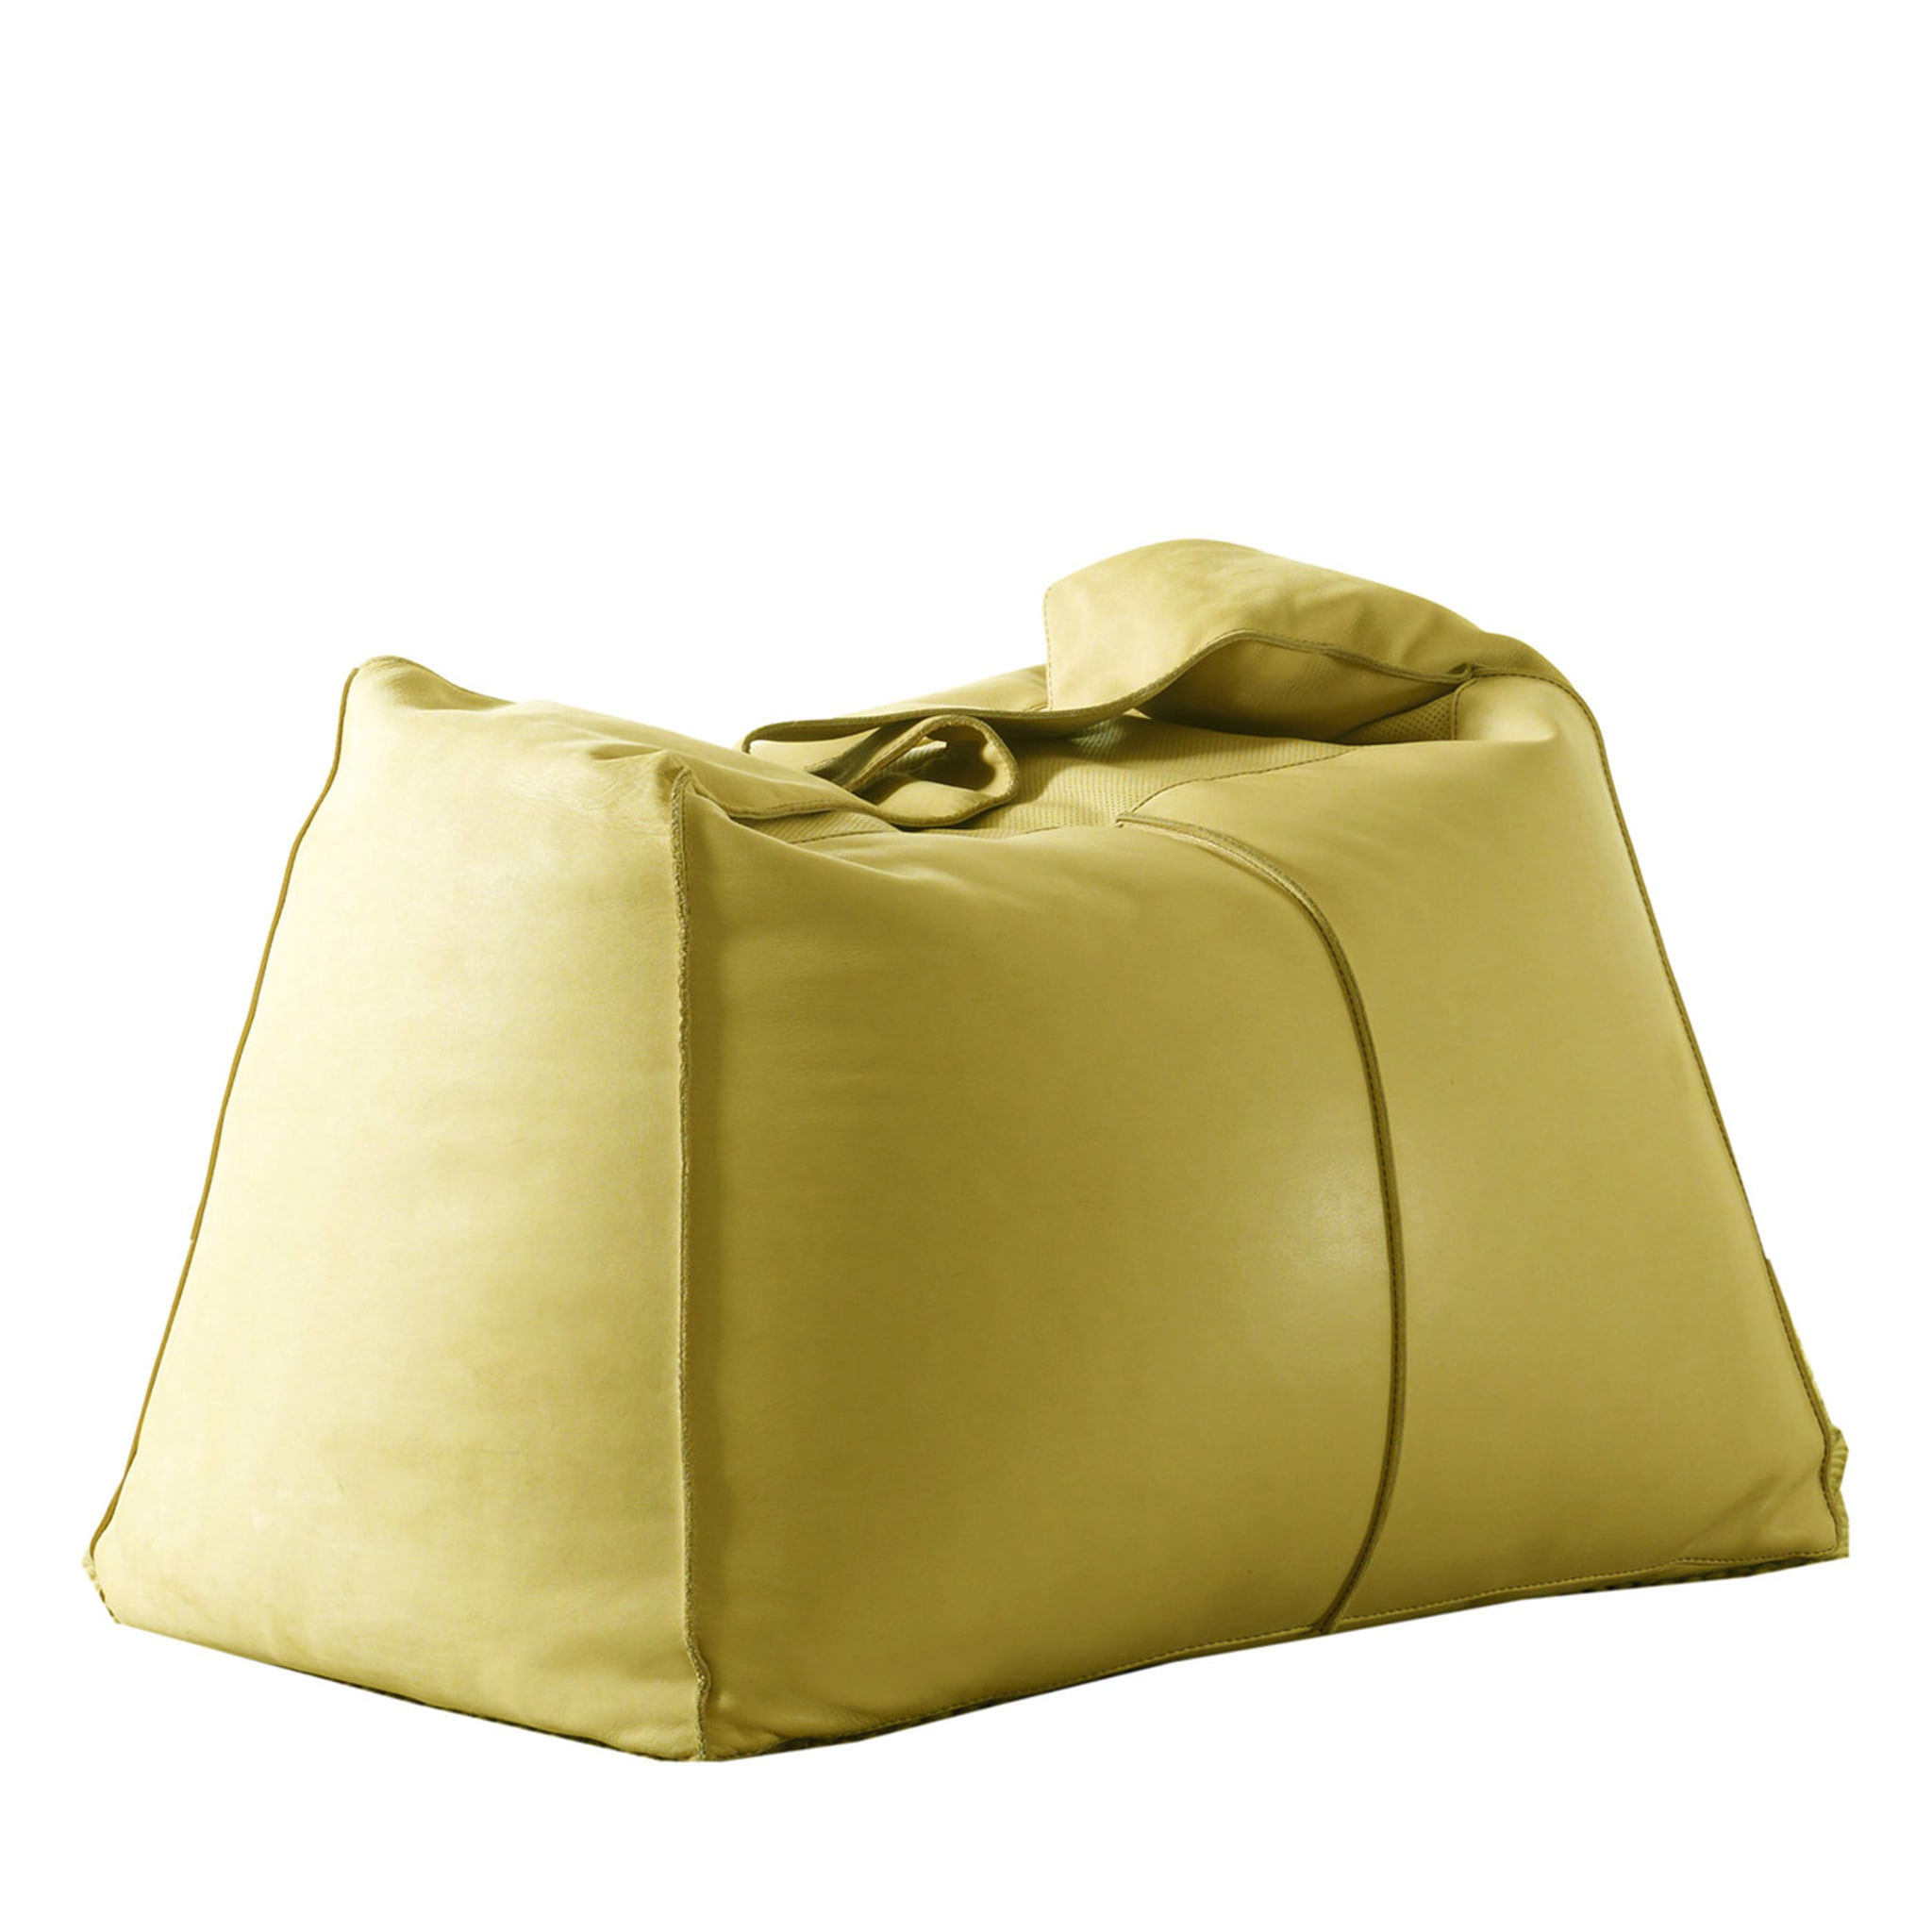 Bag Yellow Pouf by Radice & Orlandini - Main view